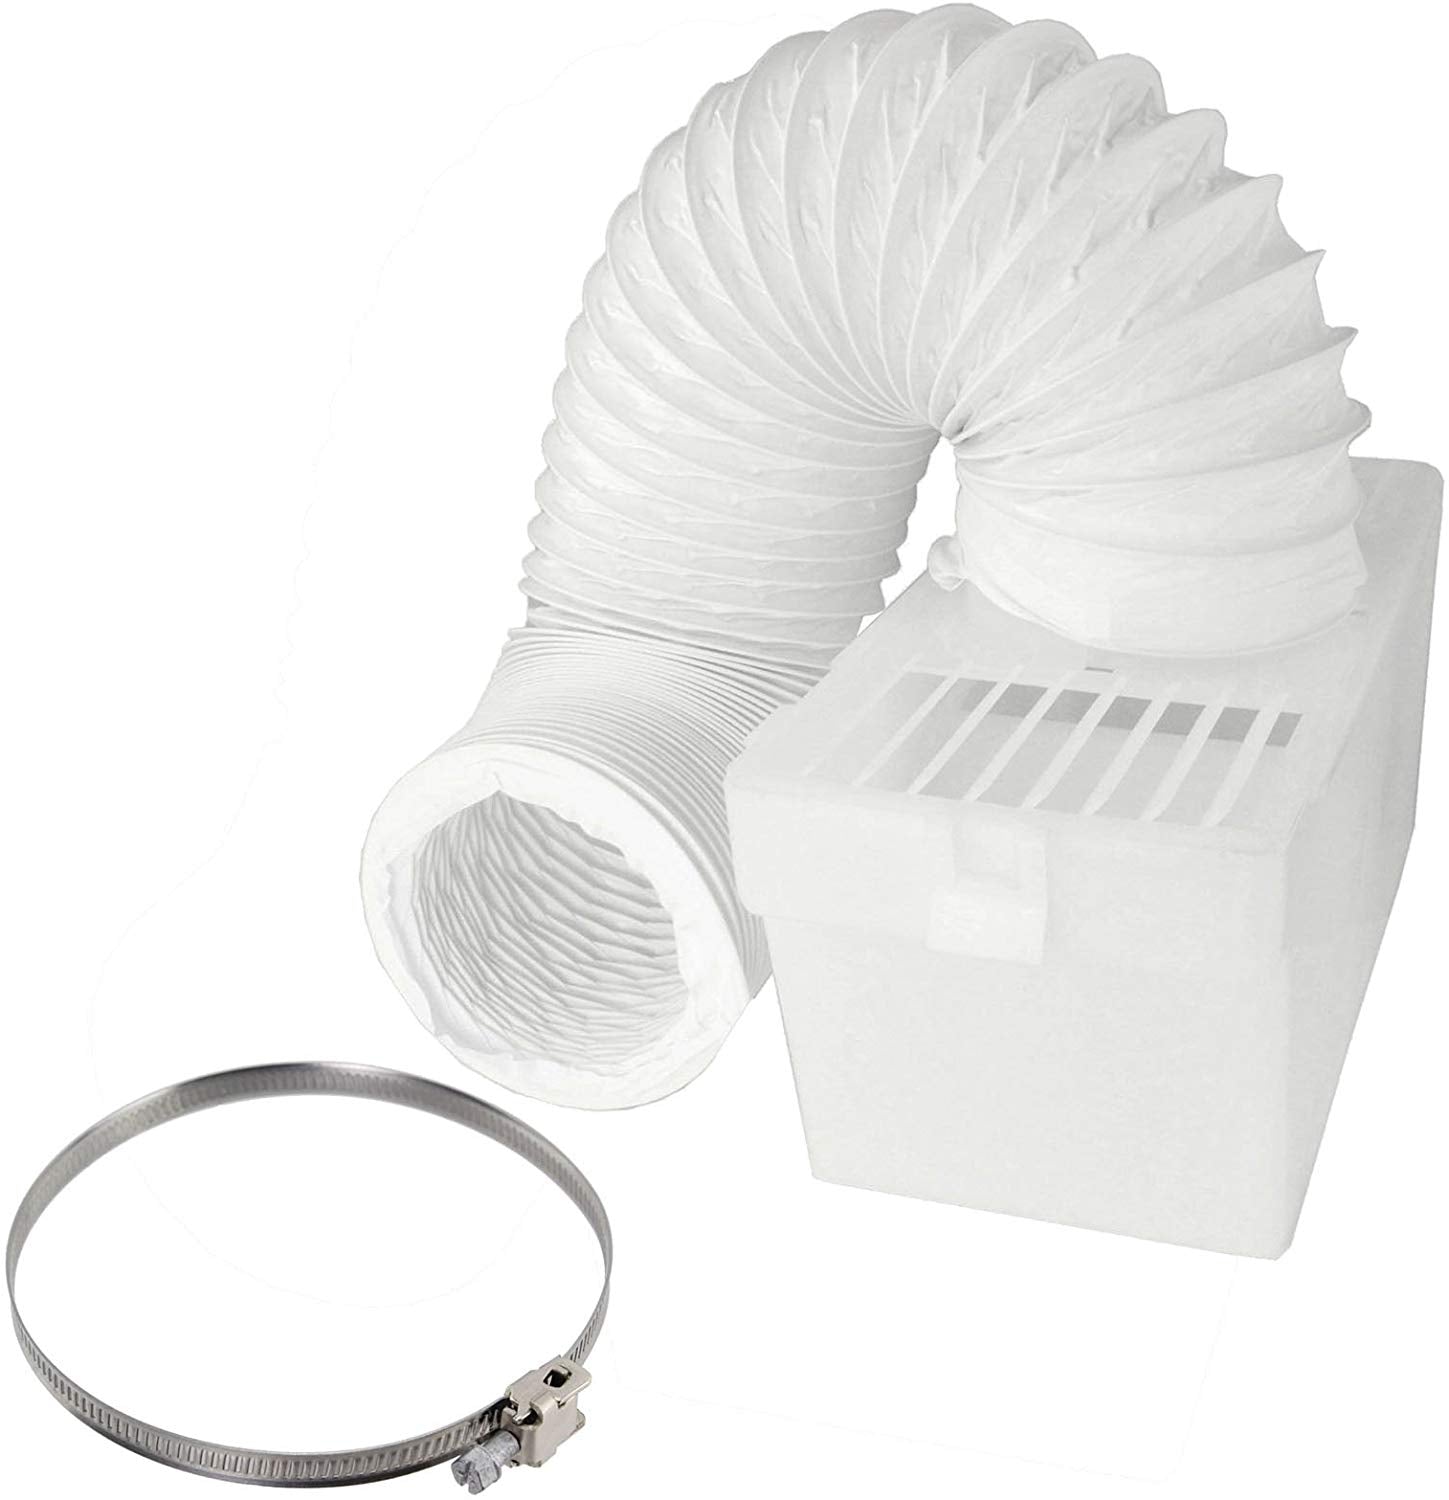 Condenser Vent Box & Hose Kit With Screw Clip for Logik Vented Tumble Dryer (4" / 100mm Diameter)